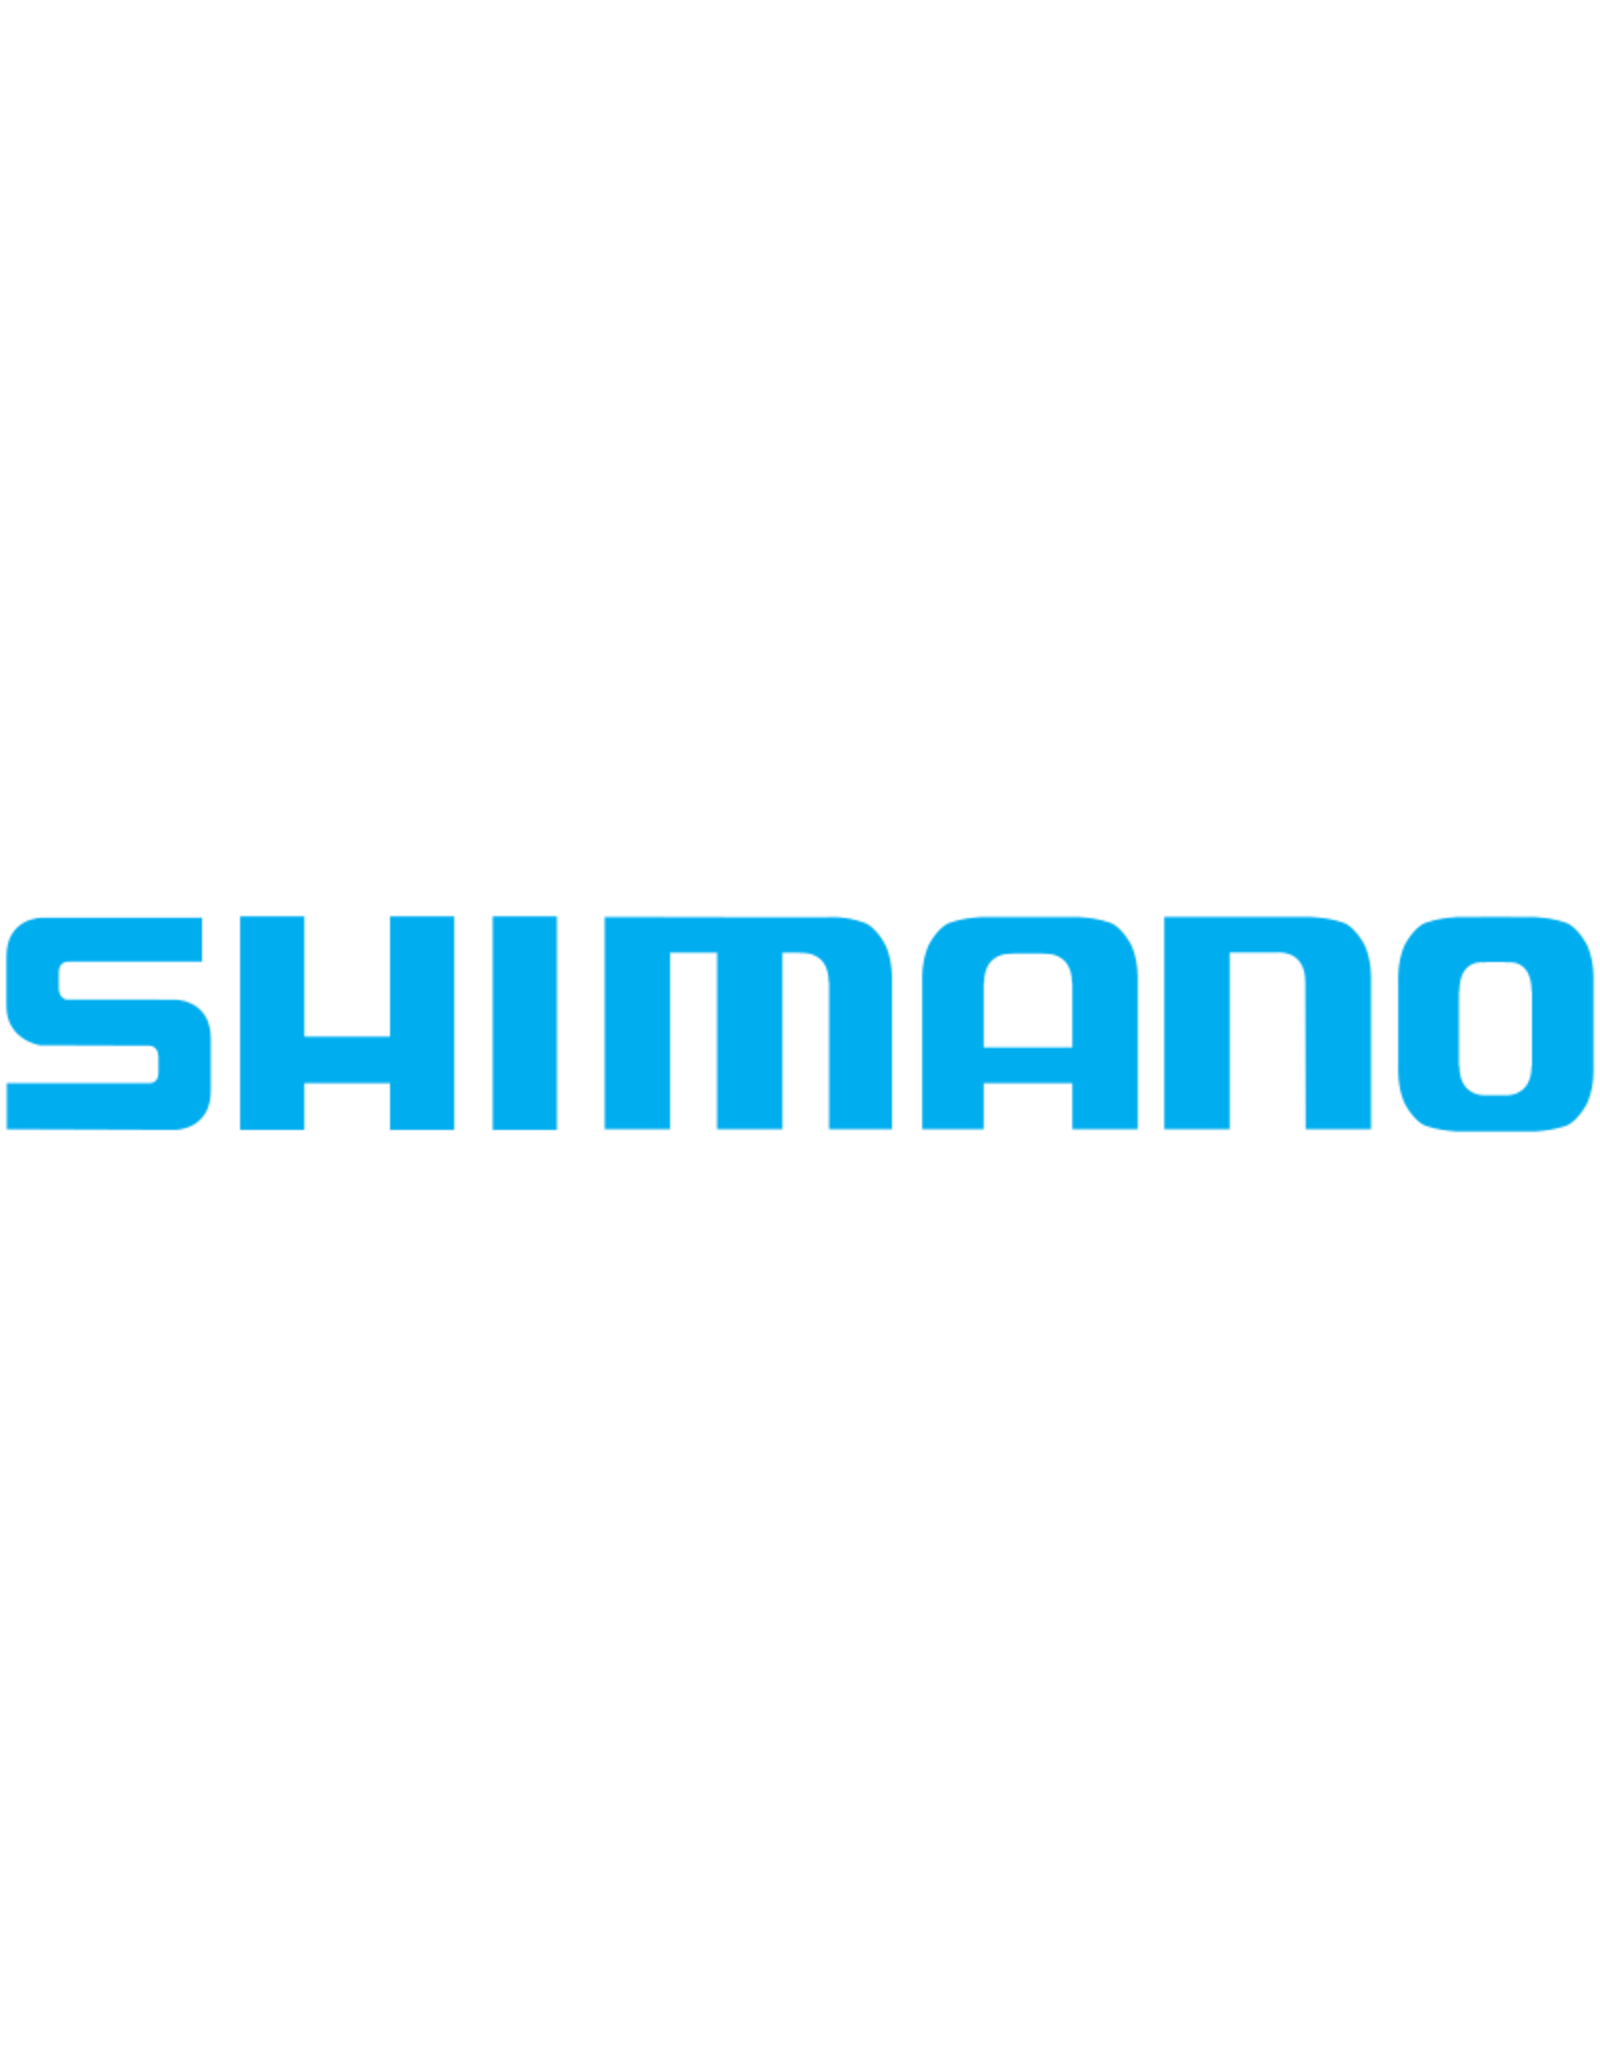 Shimano RD16321  DRAG WASHER